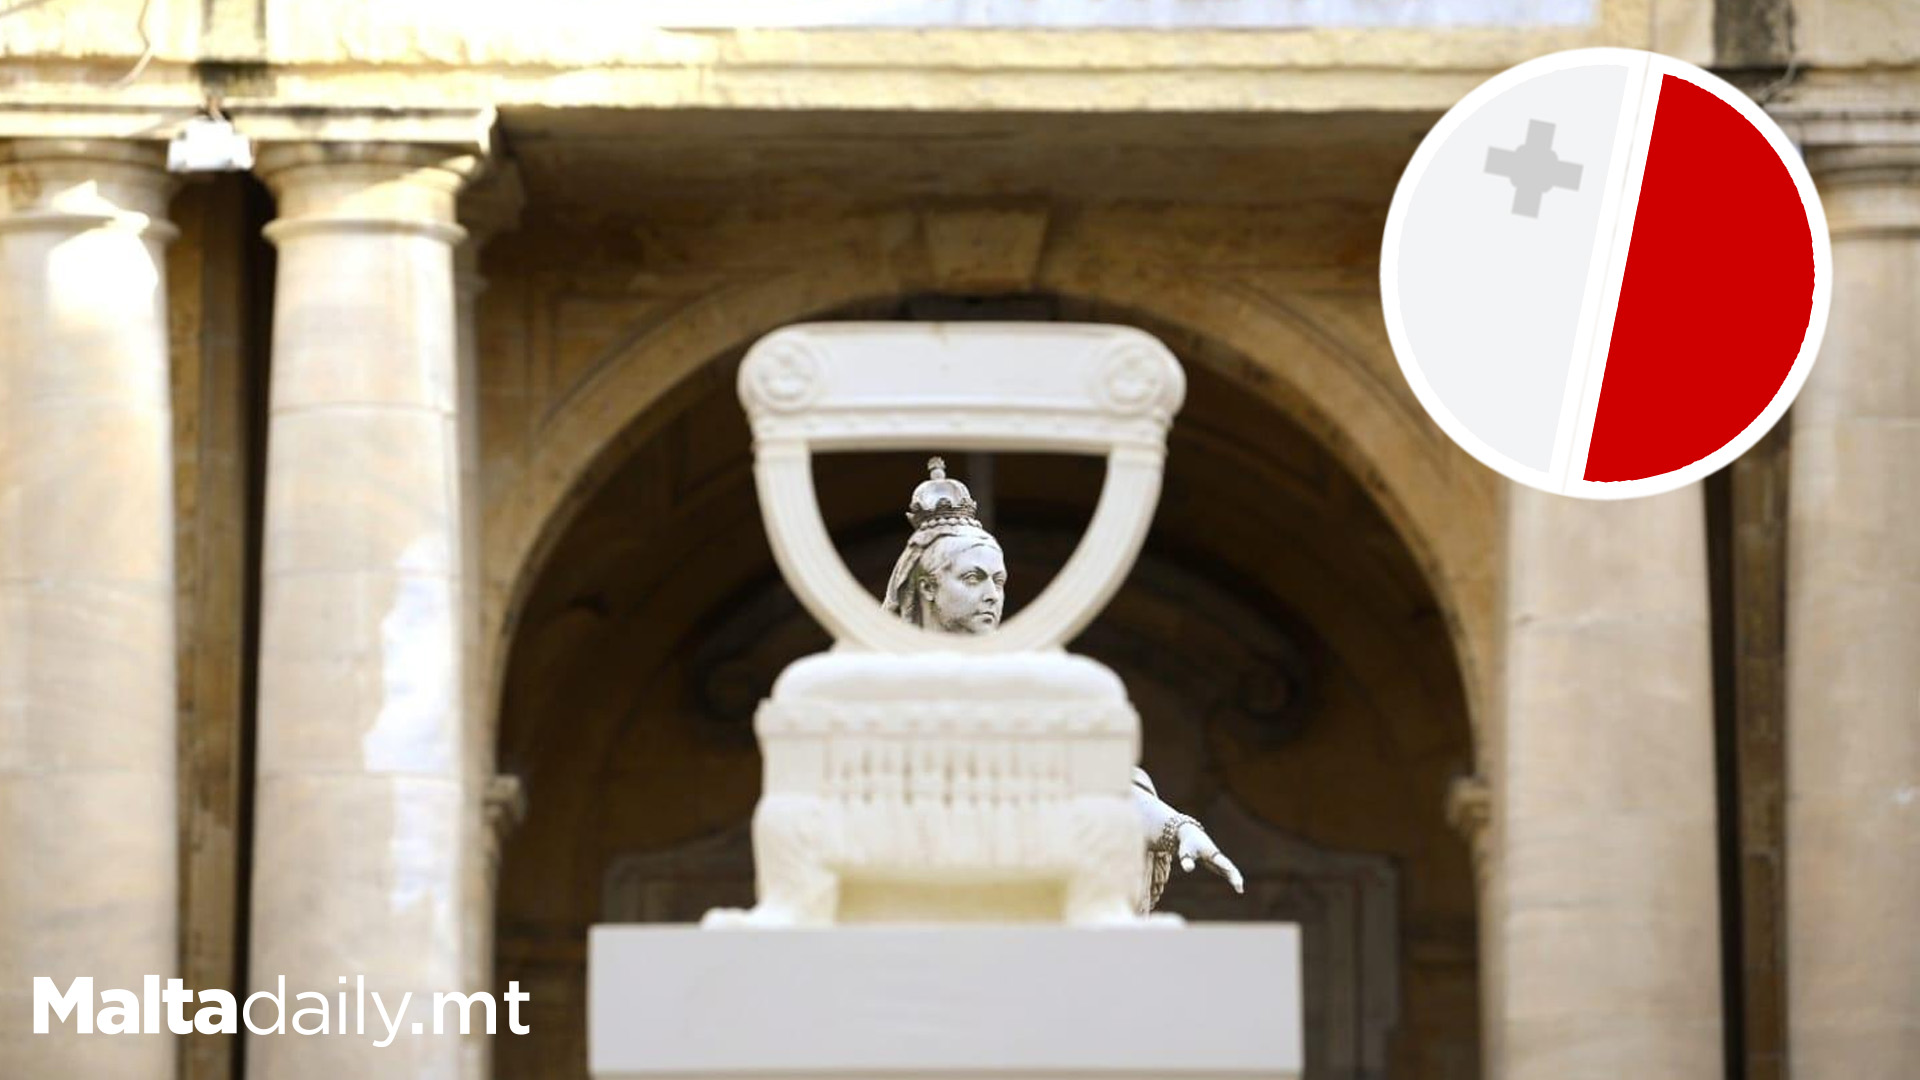 Siġġu: Malta's Bold New Sculpture